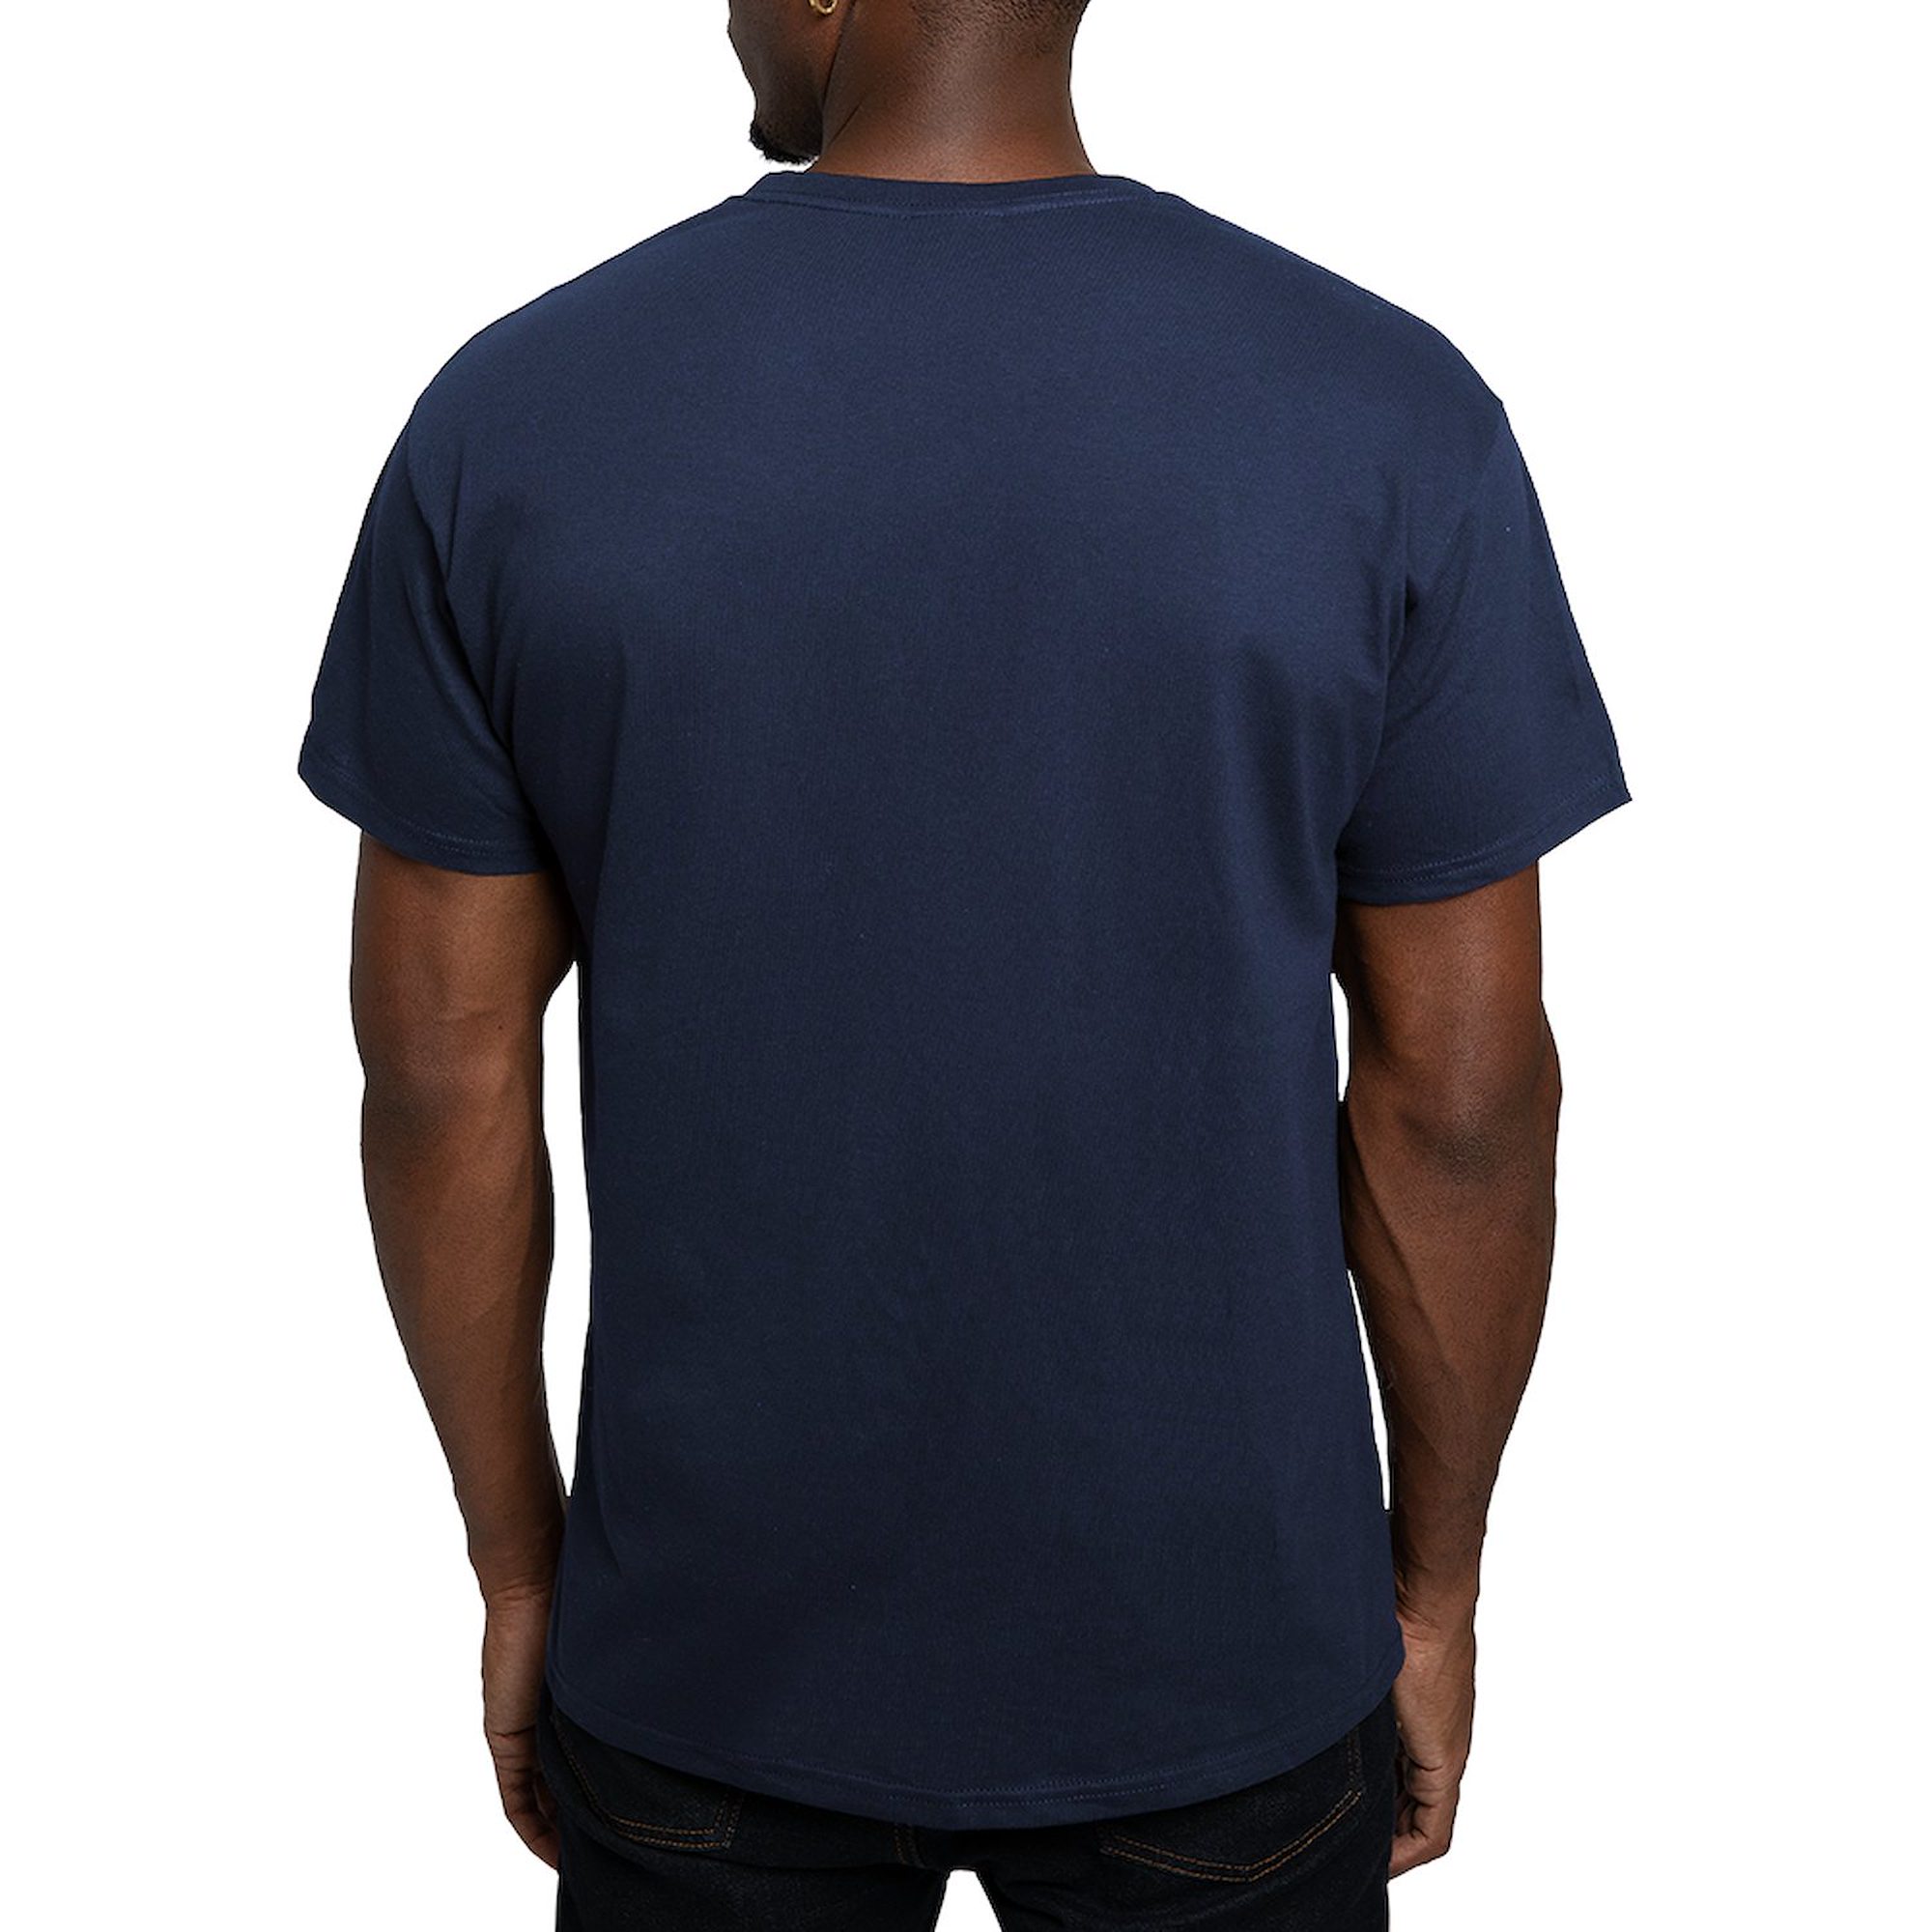 CafePress - Finger Lakes 2 Logo T Shirt - Men's Fitted T-Shirt - image 2 of 4